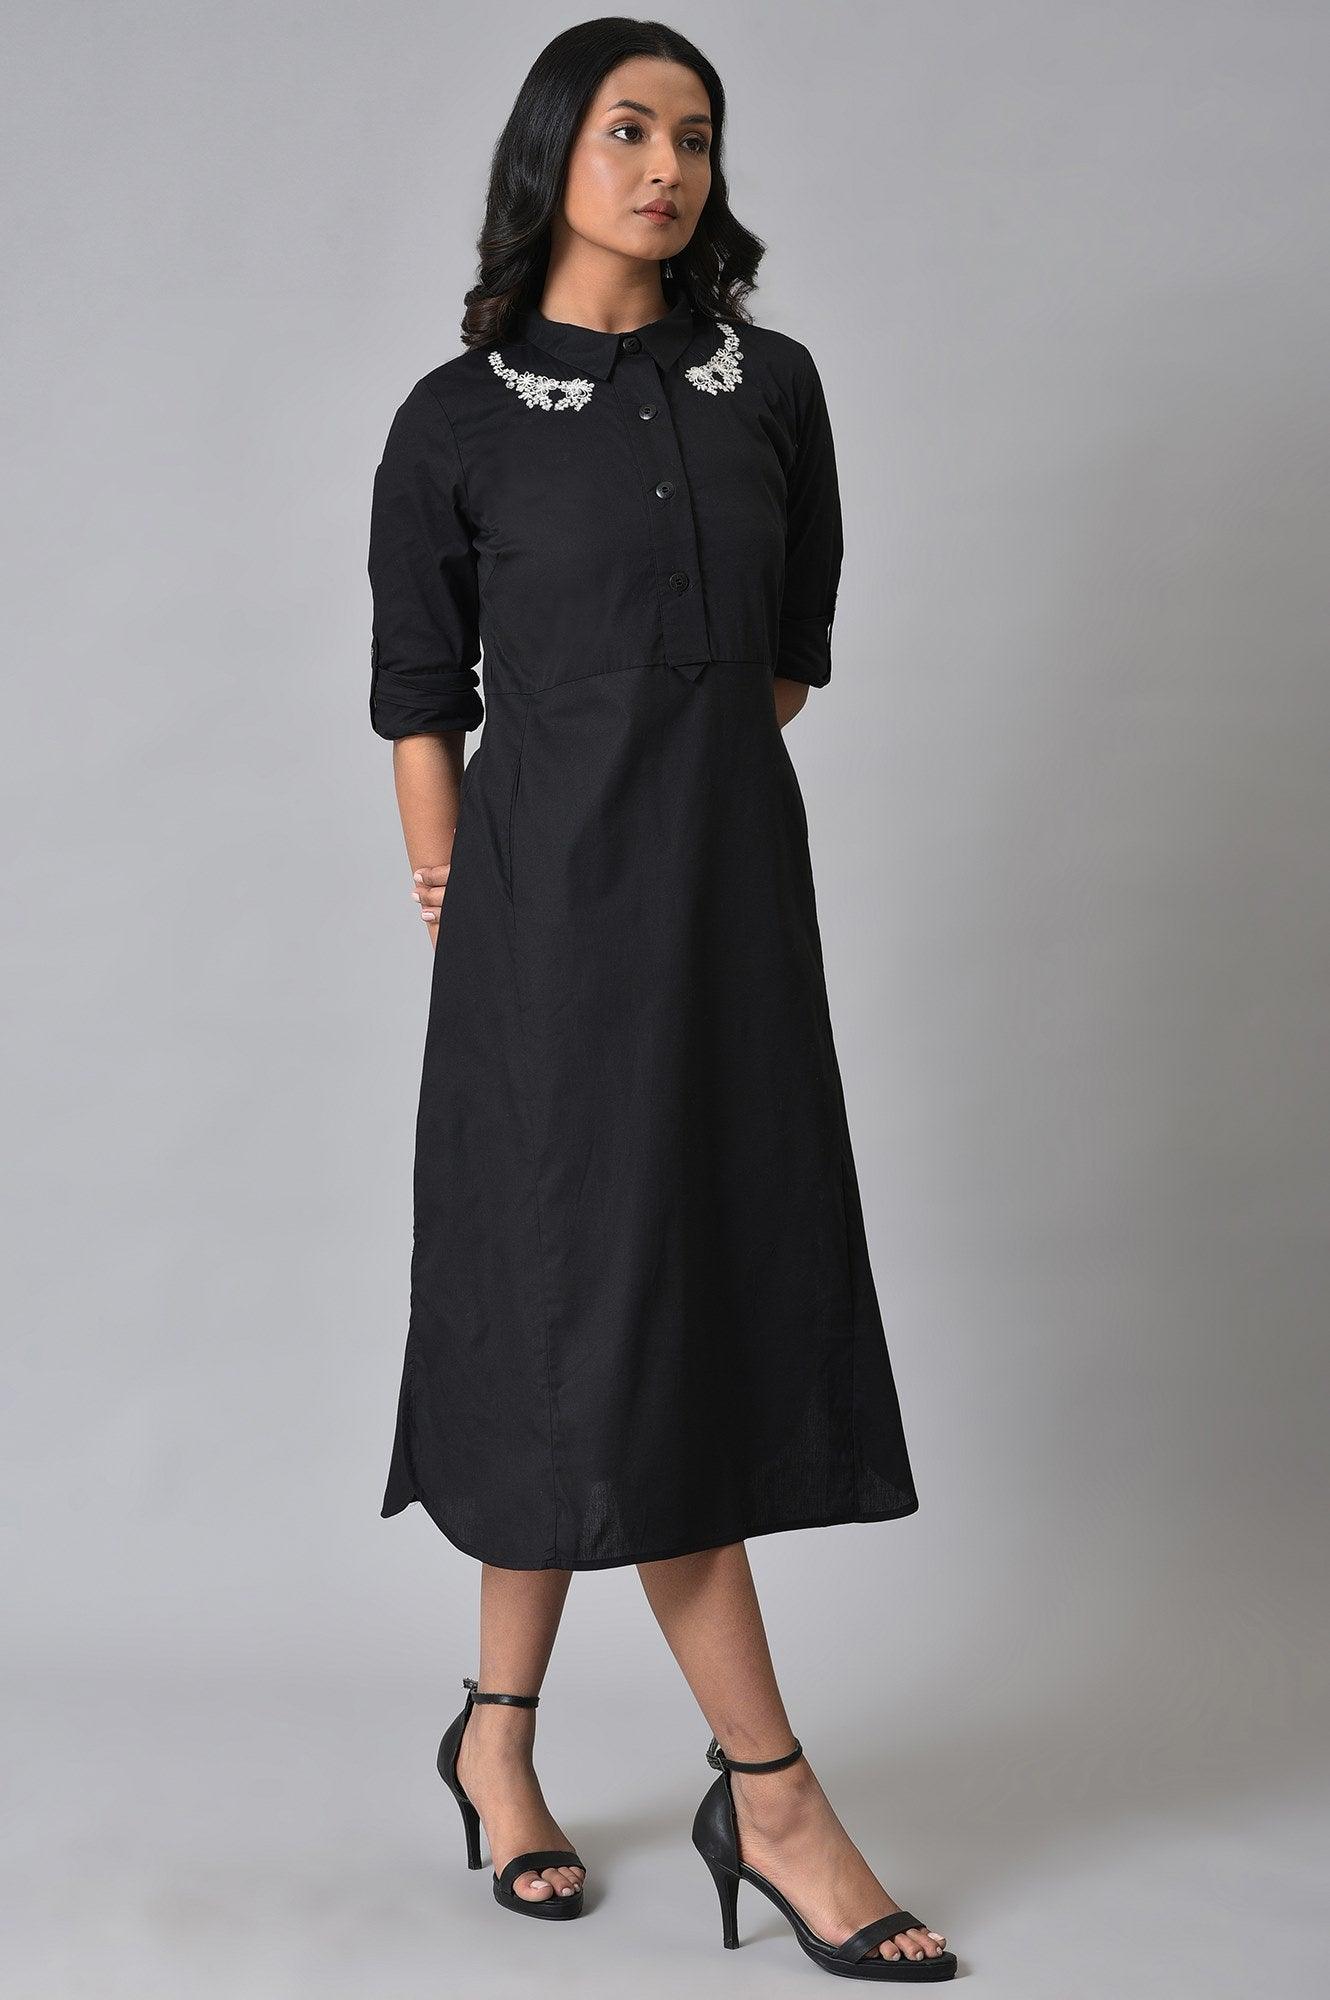 Black Cotton Embroidered Plus Size Shirt Dress - wforwoman